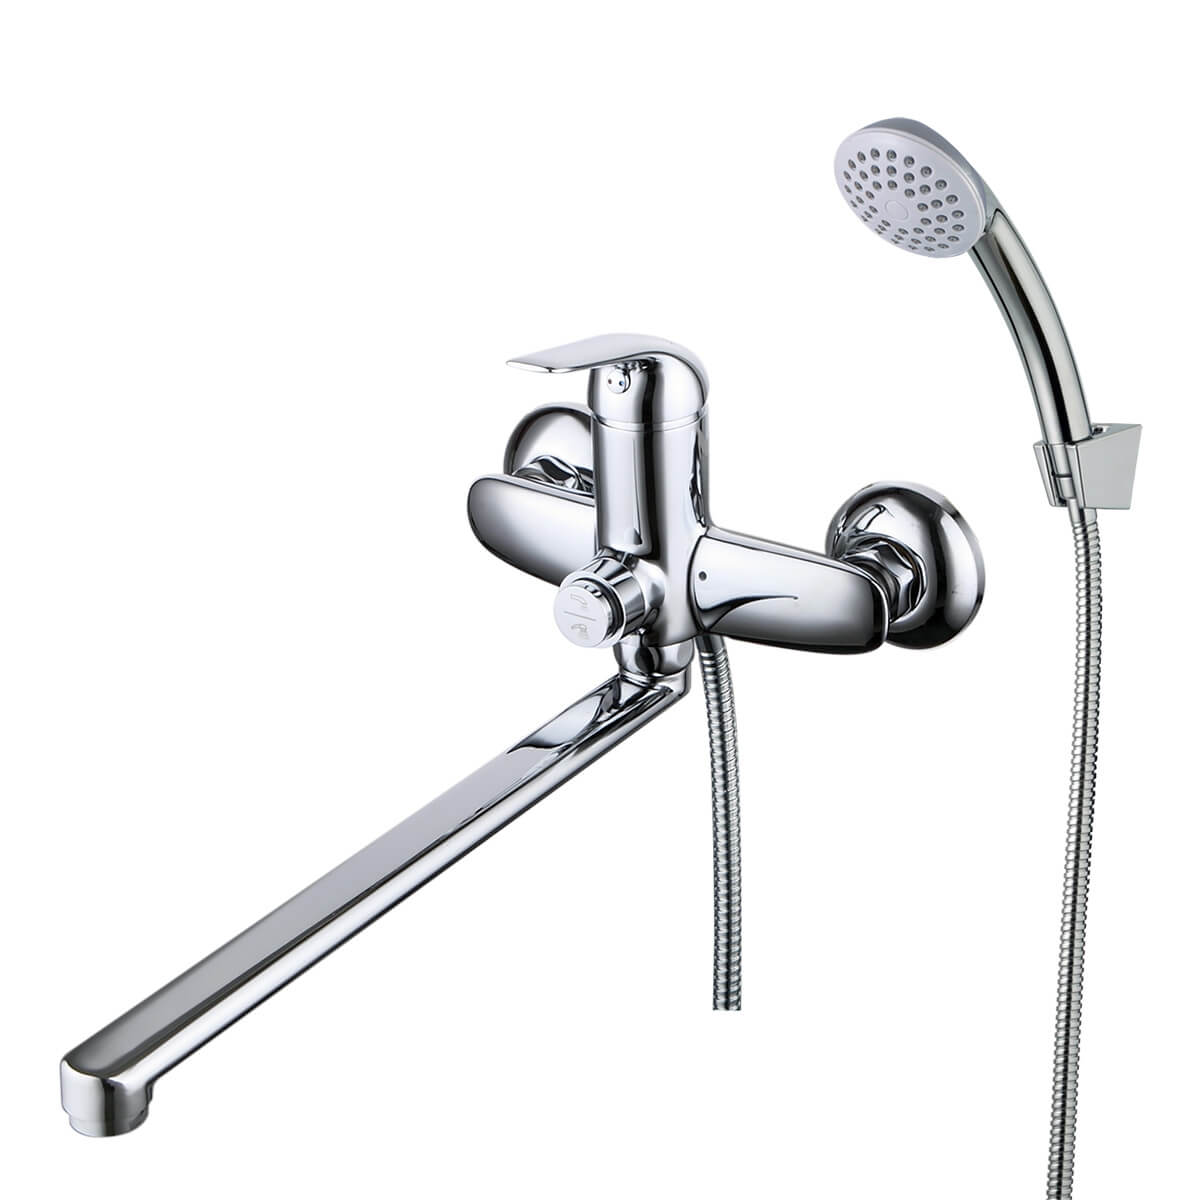 LM1257C Washbasin/bath faucet
with 300 mm flat swivel spout